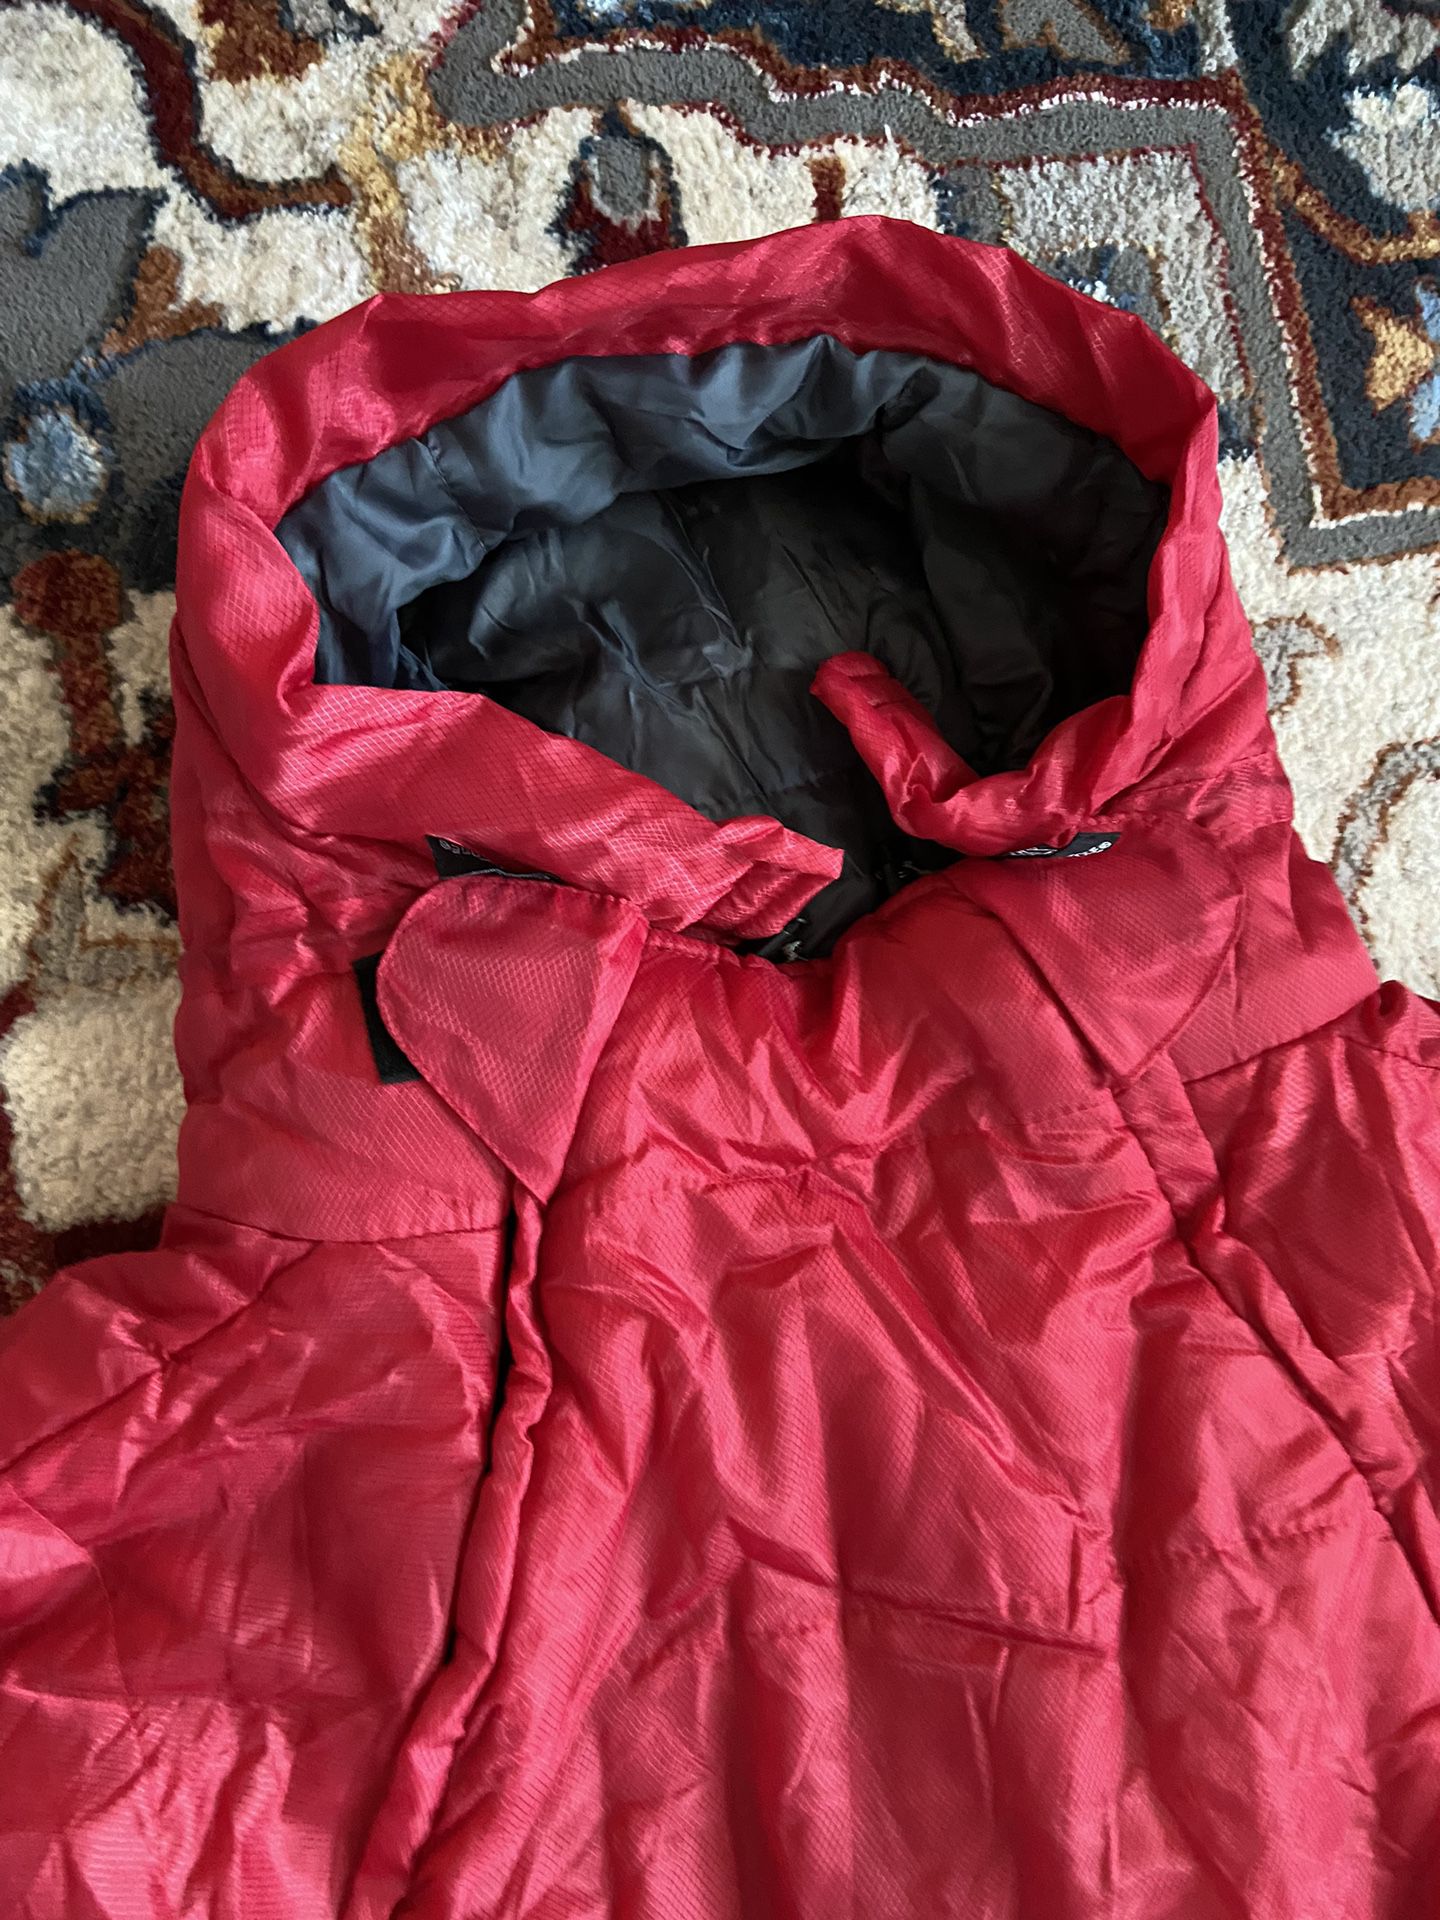 Brand New Adventuridge Camping Sleeping Bag Lady’s Small